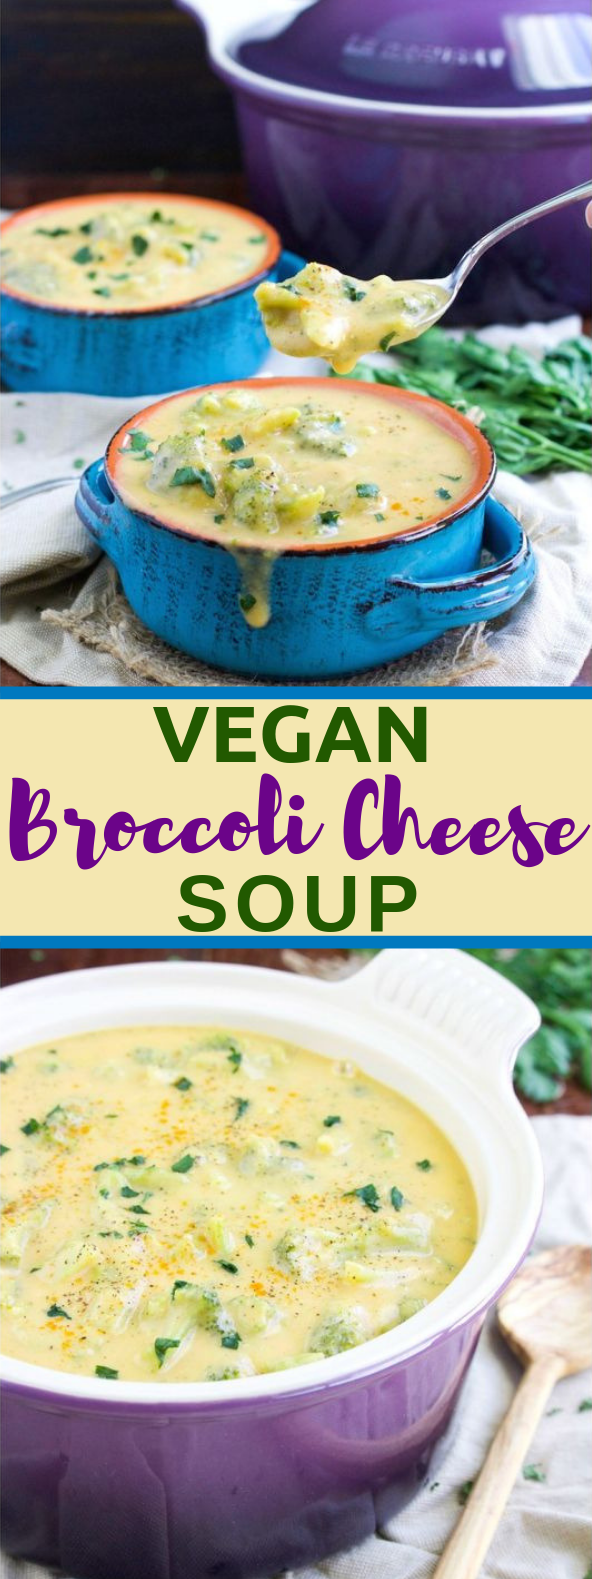 VEGAN BROCCOLI CHEESE SOUP RECIPE #veganrecipe #soups